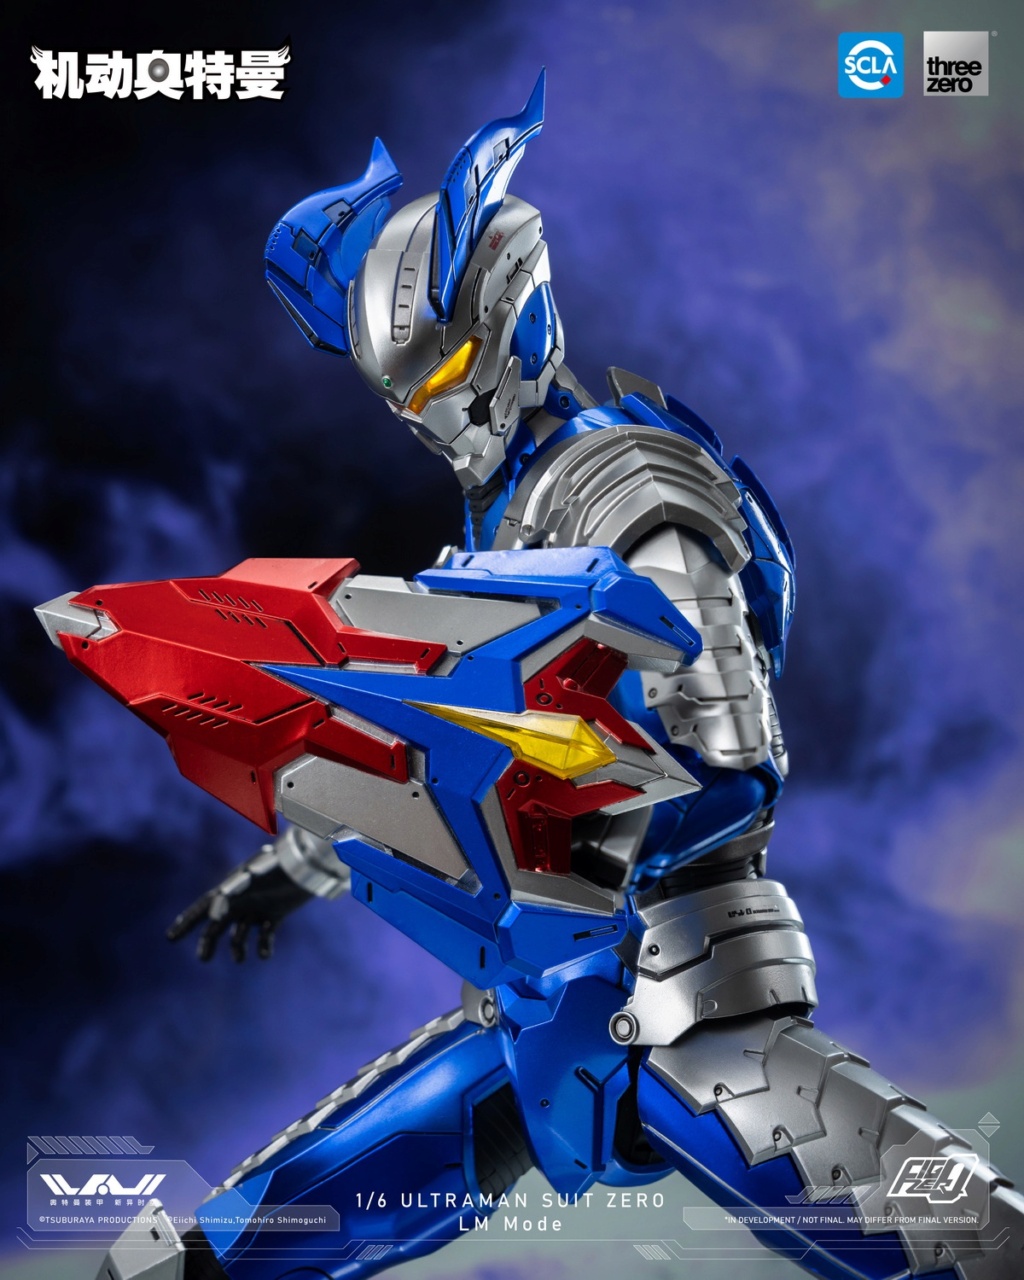 LMMode - NEW PRODUCT: Threezero: FigZero 1/6 Ultraman Suit Zero - LM Mode action figure 17242110